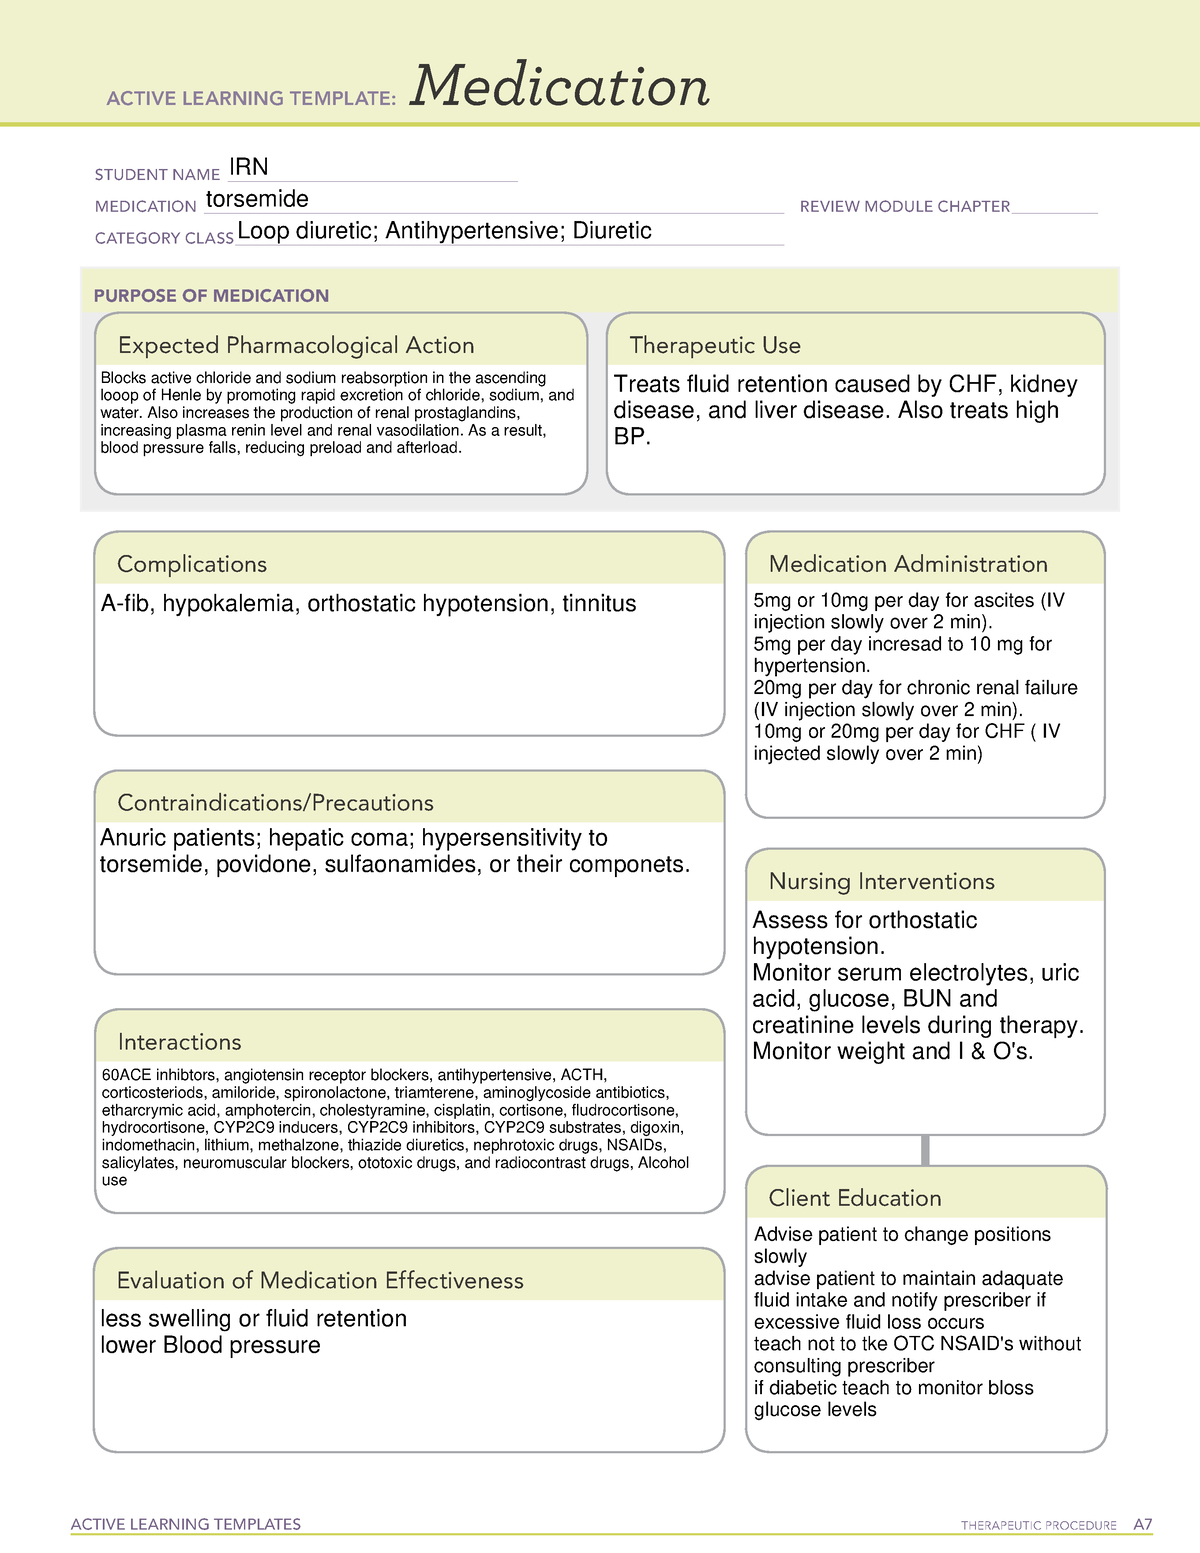 ati-alt-medication-torsemide-active-learning-templates-therapeutic-procedure-a-medication